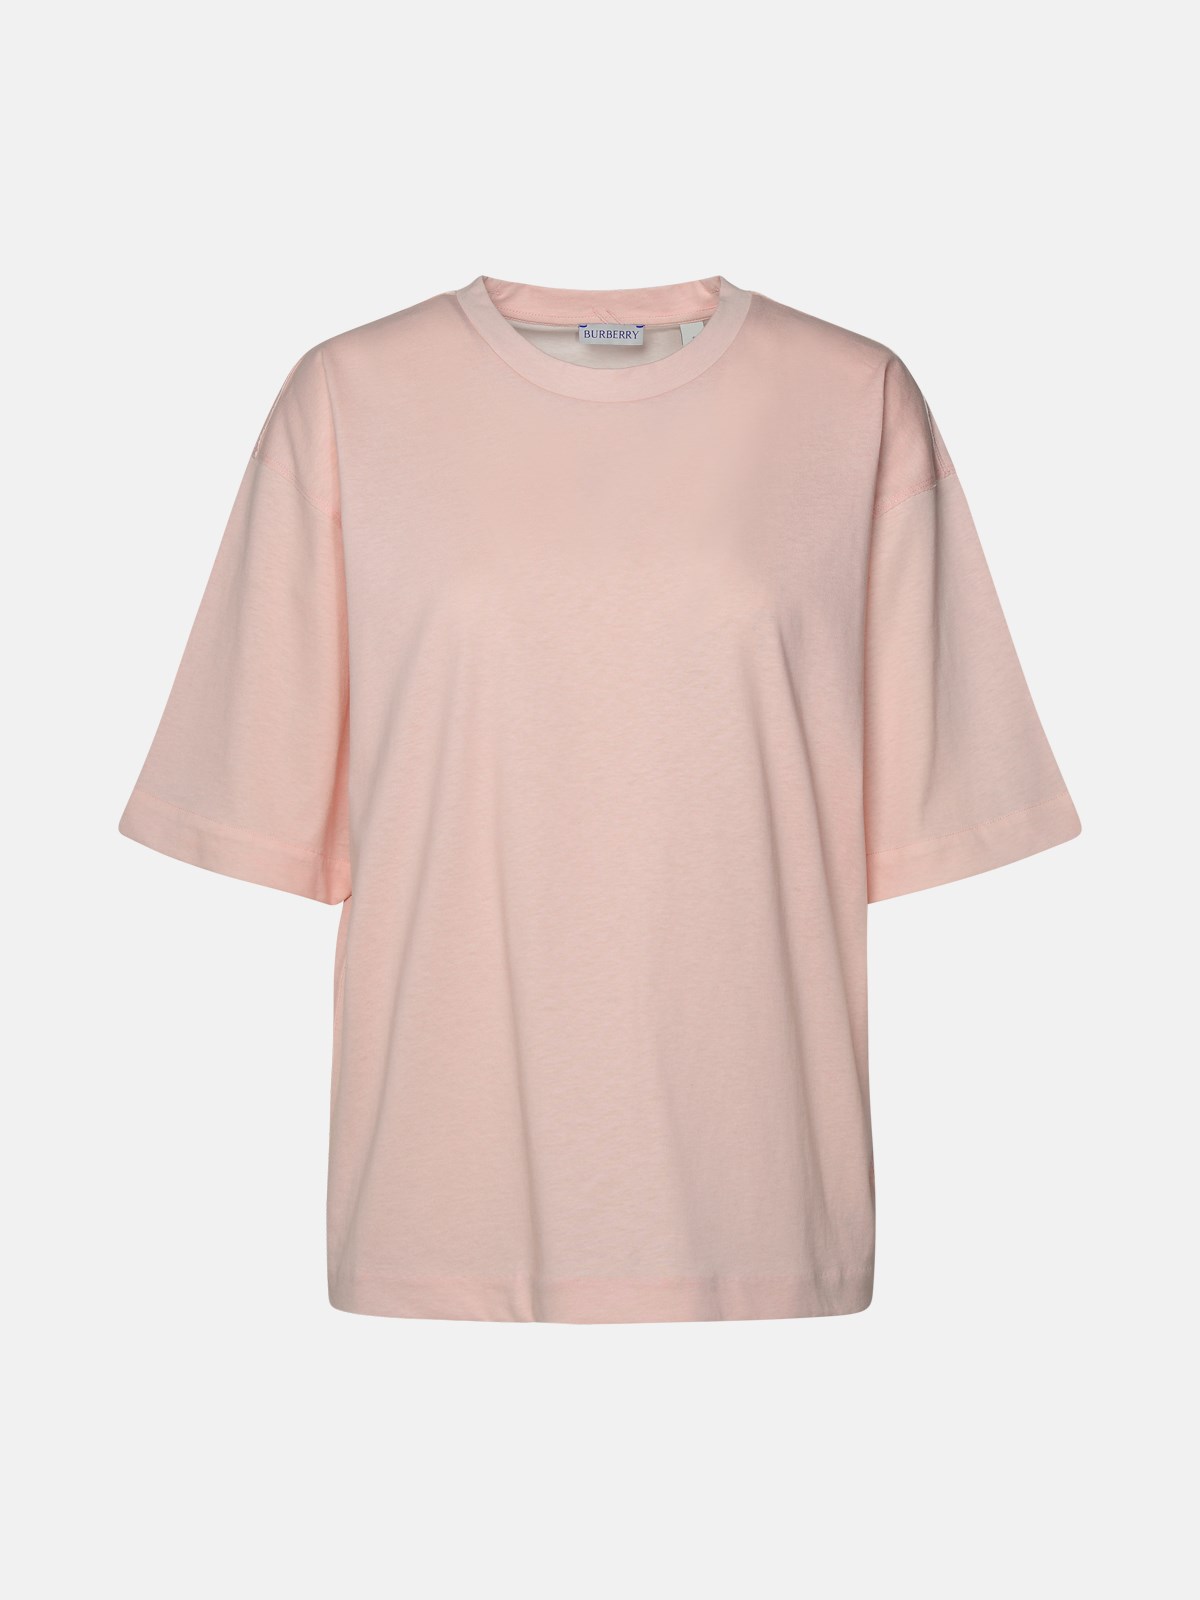 Burberry Pink Cotton T-shirt